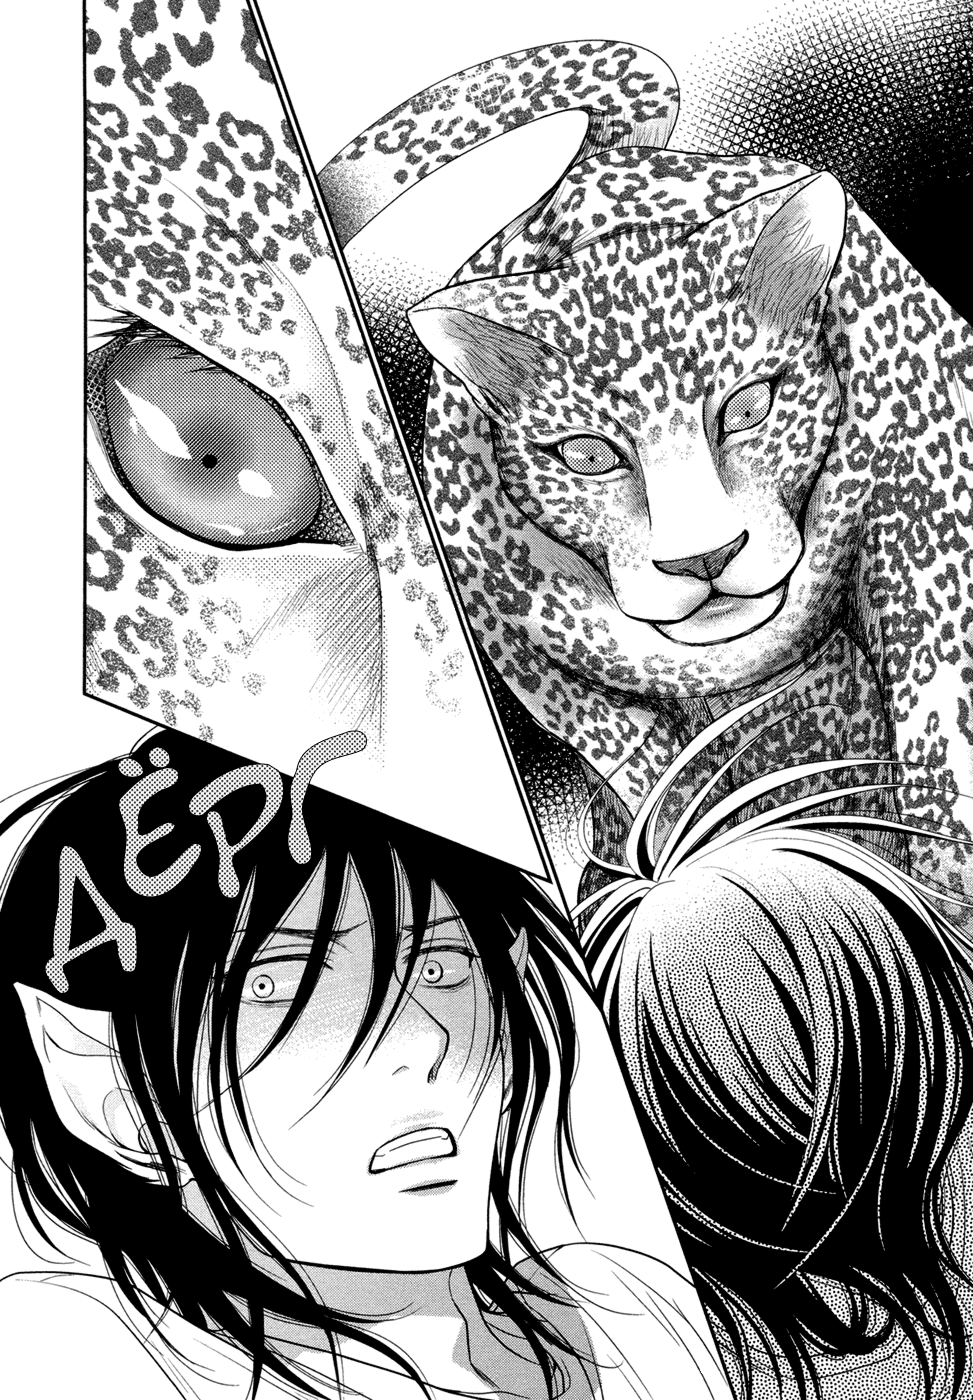 Манга яой звери. Куронеко Кареши. Манга Kuroneko Kareshi. Манга яой леопард. Яой Манга кот.